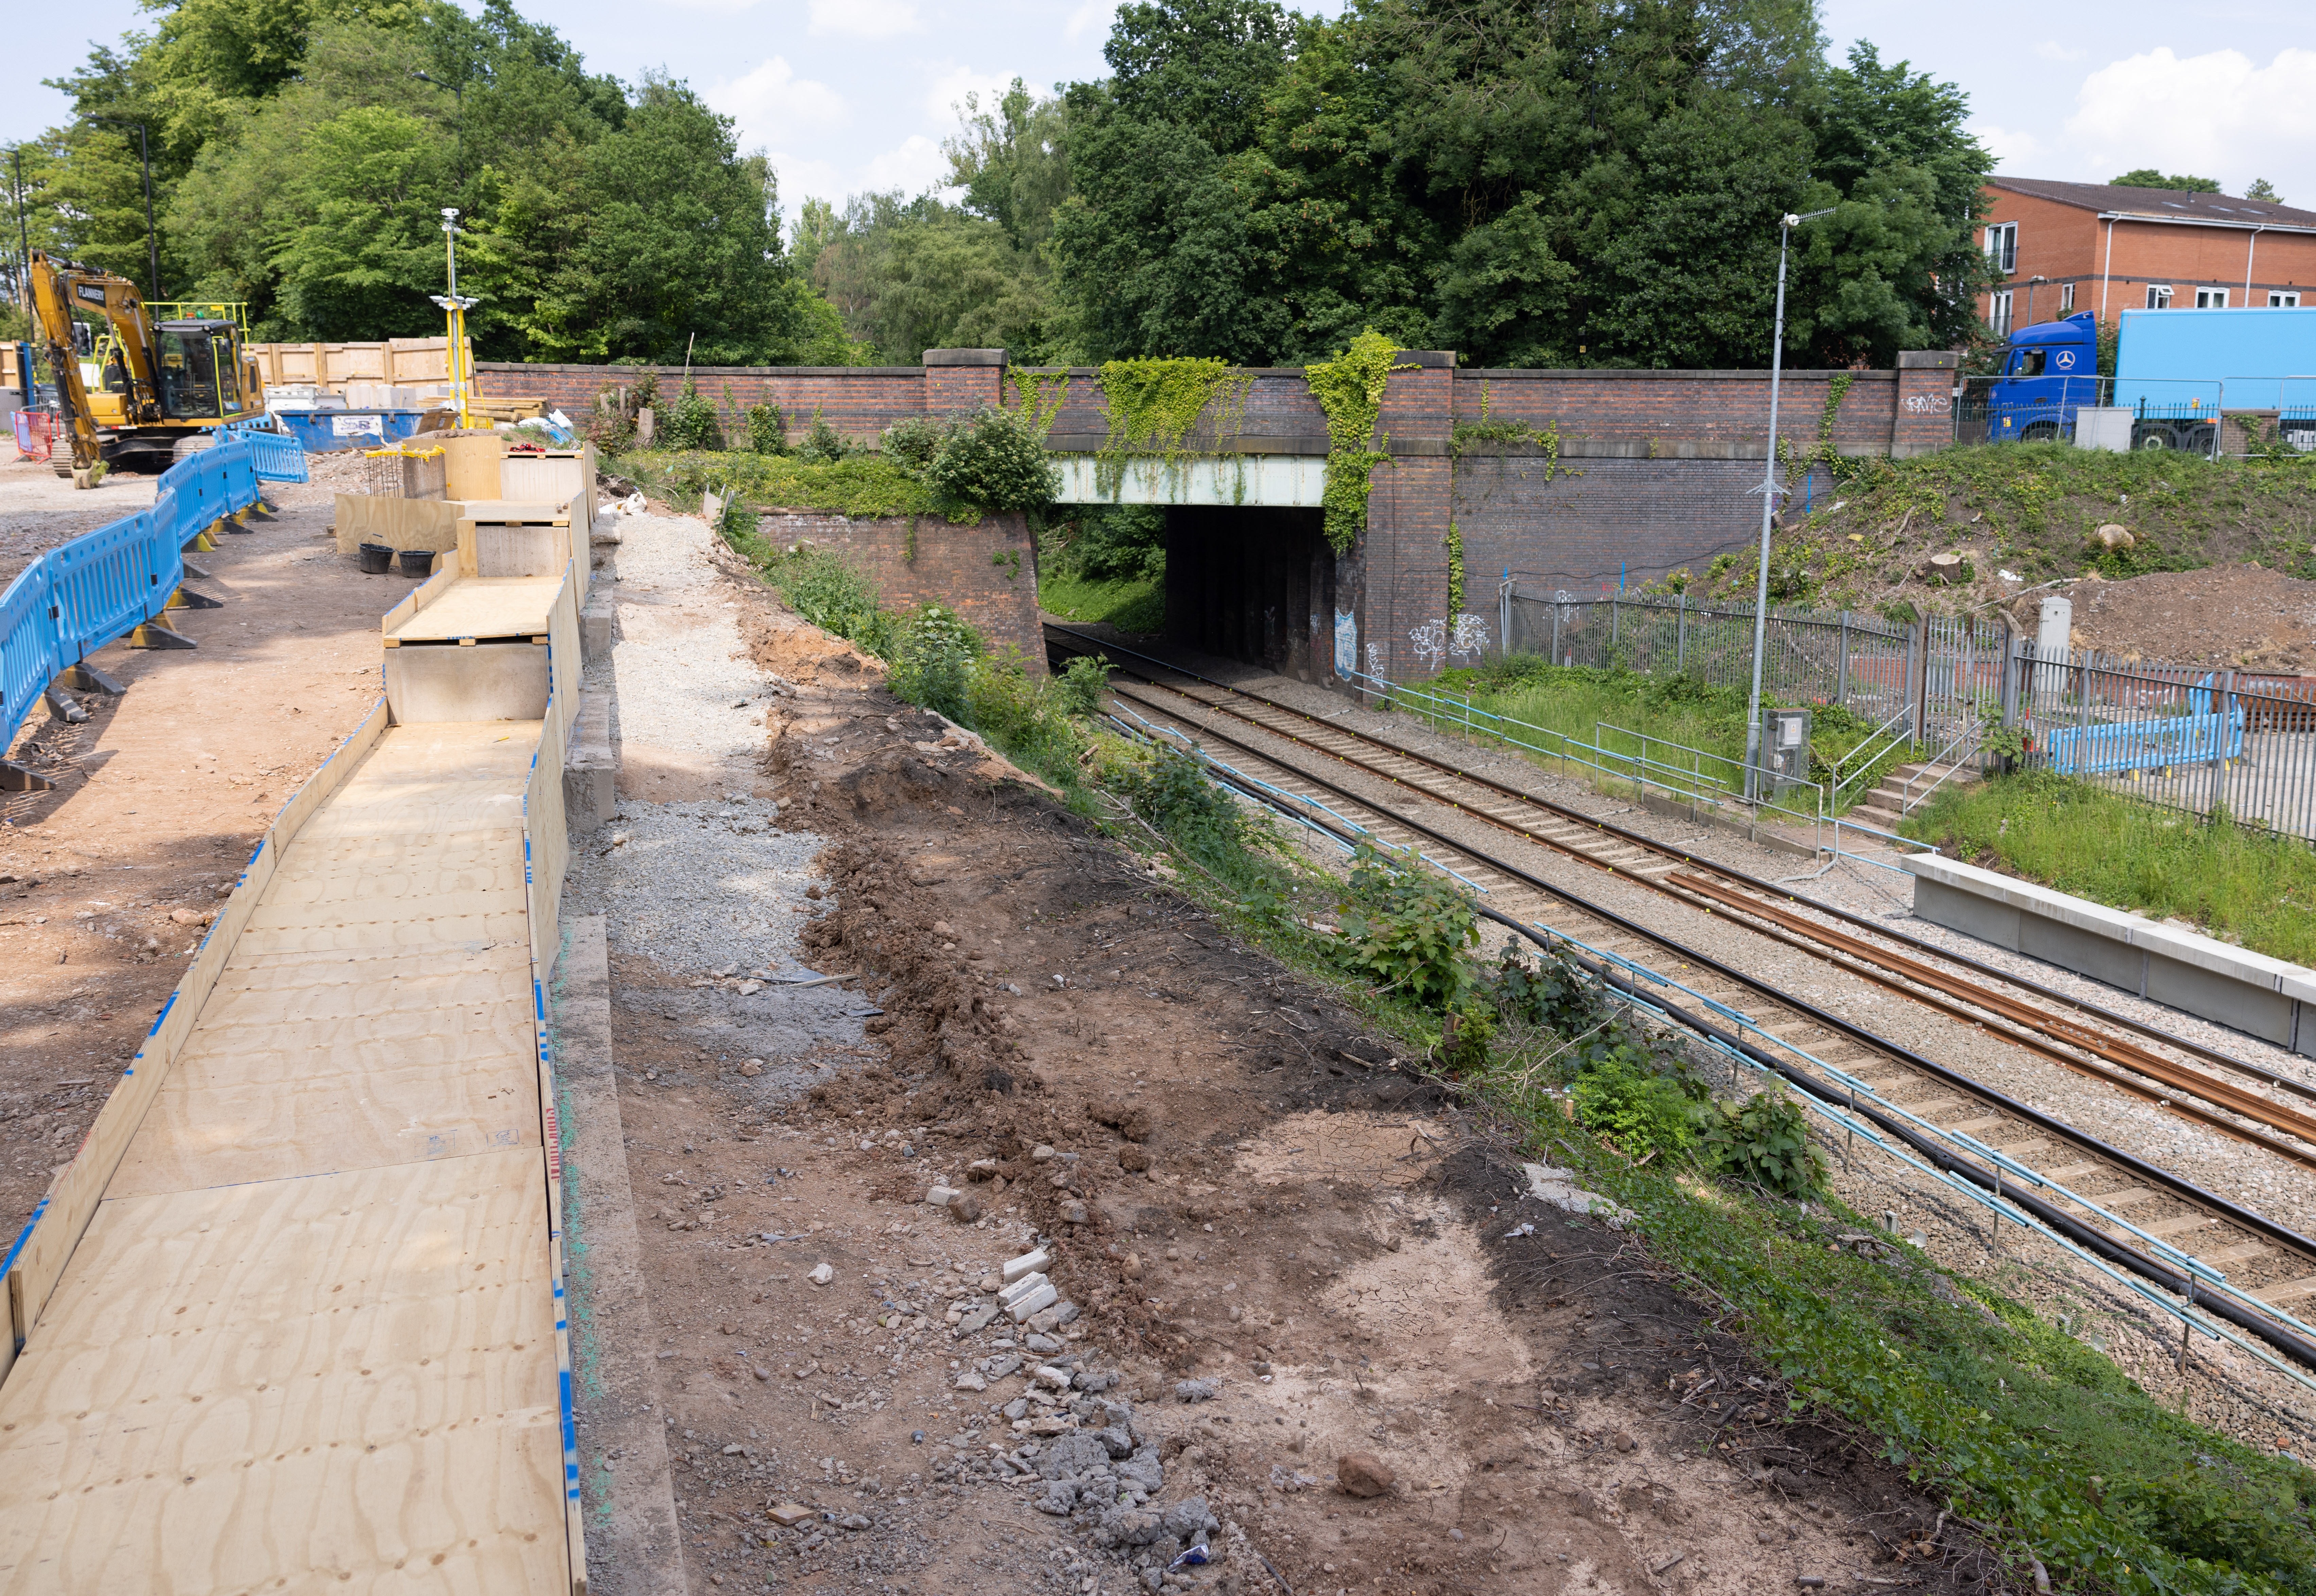 Kings Heath Station - railway bridge and building work on platforms